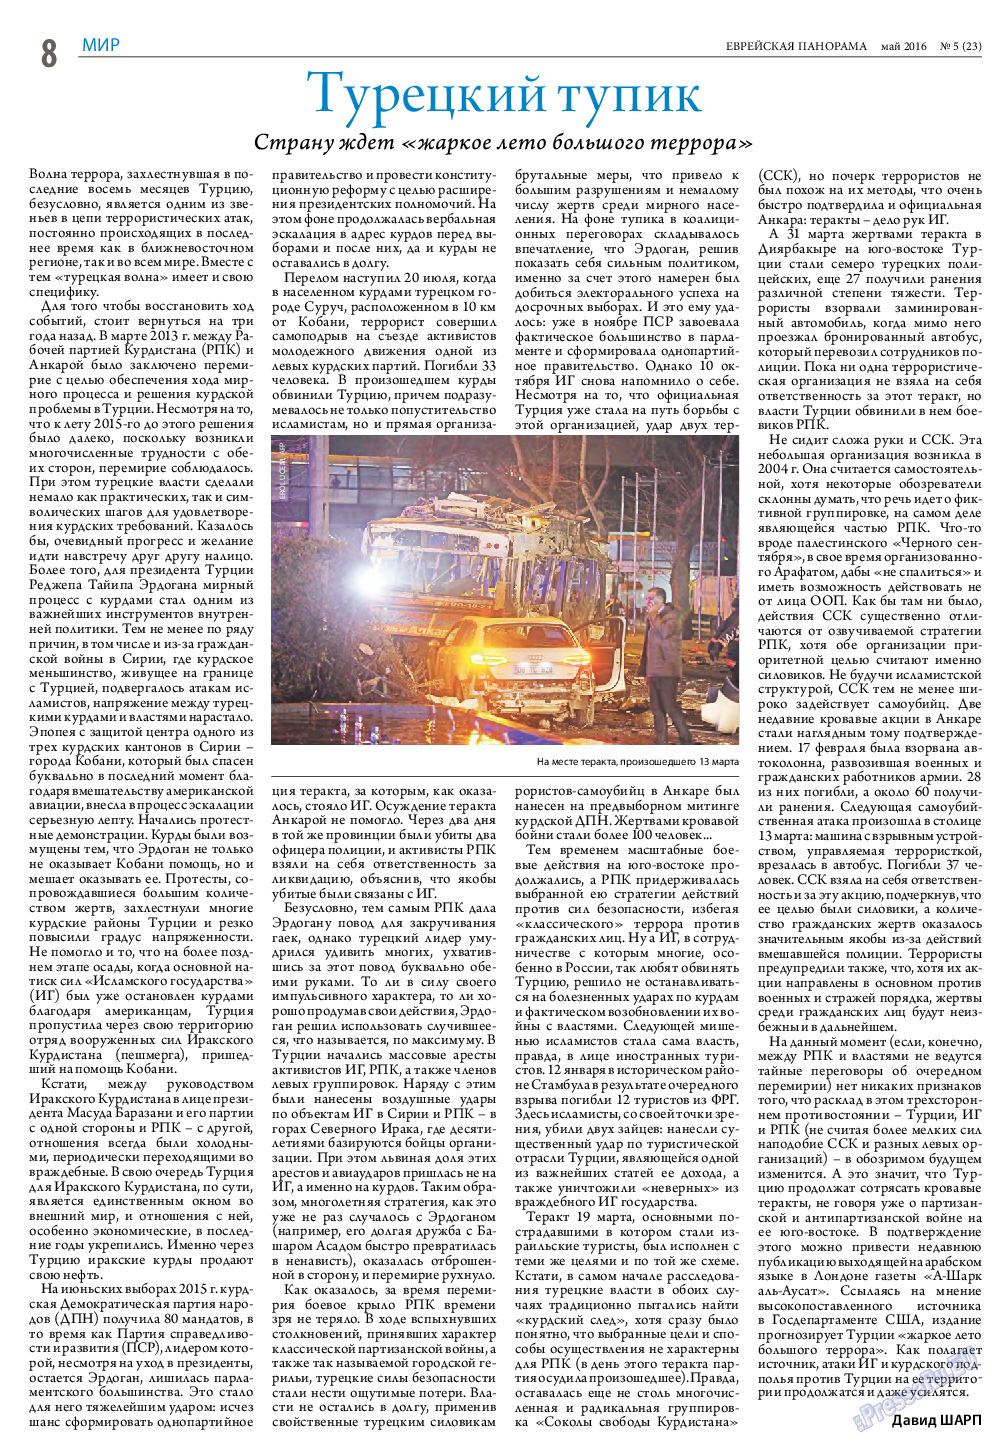 Еврейская панорама, газета. 2016 №5 стр.8